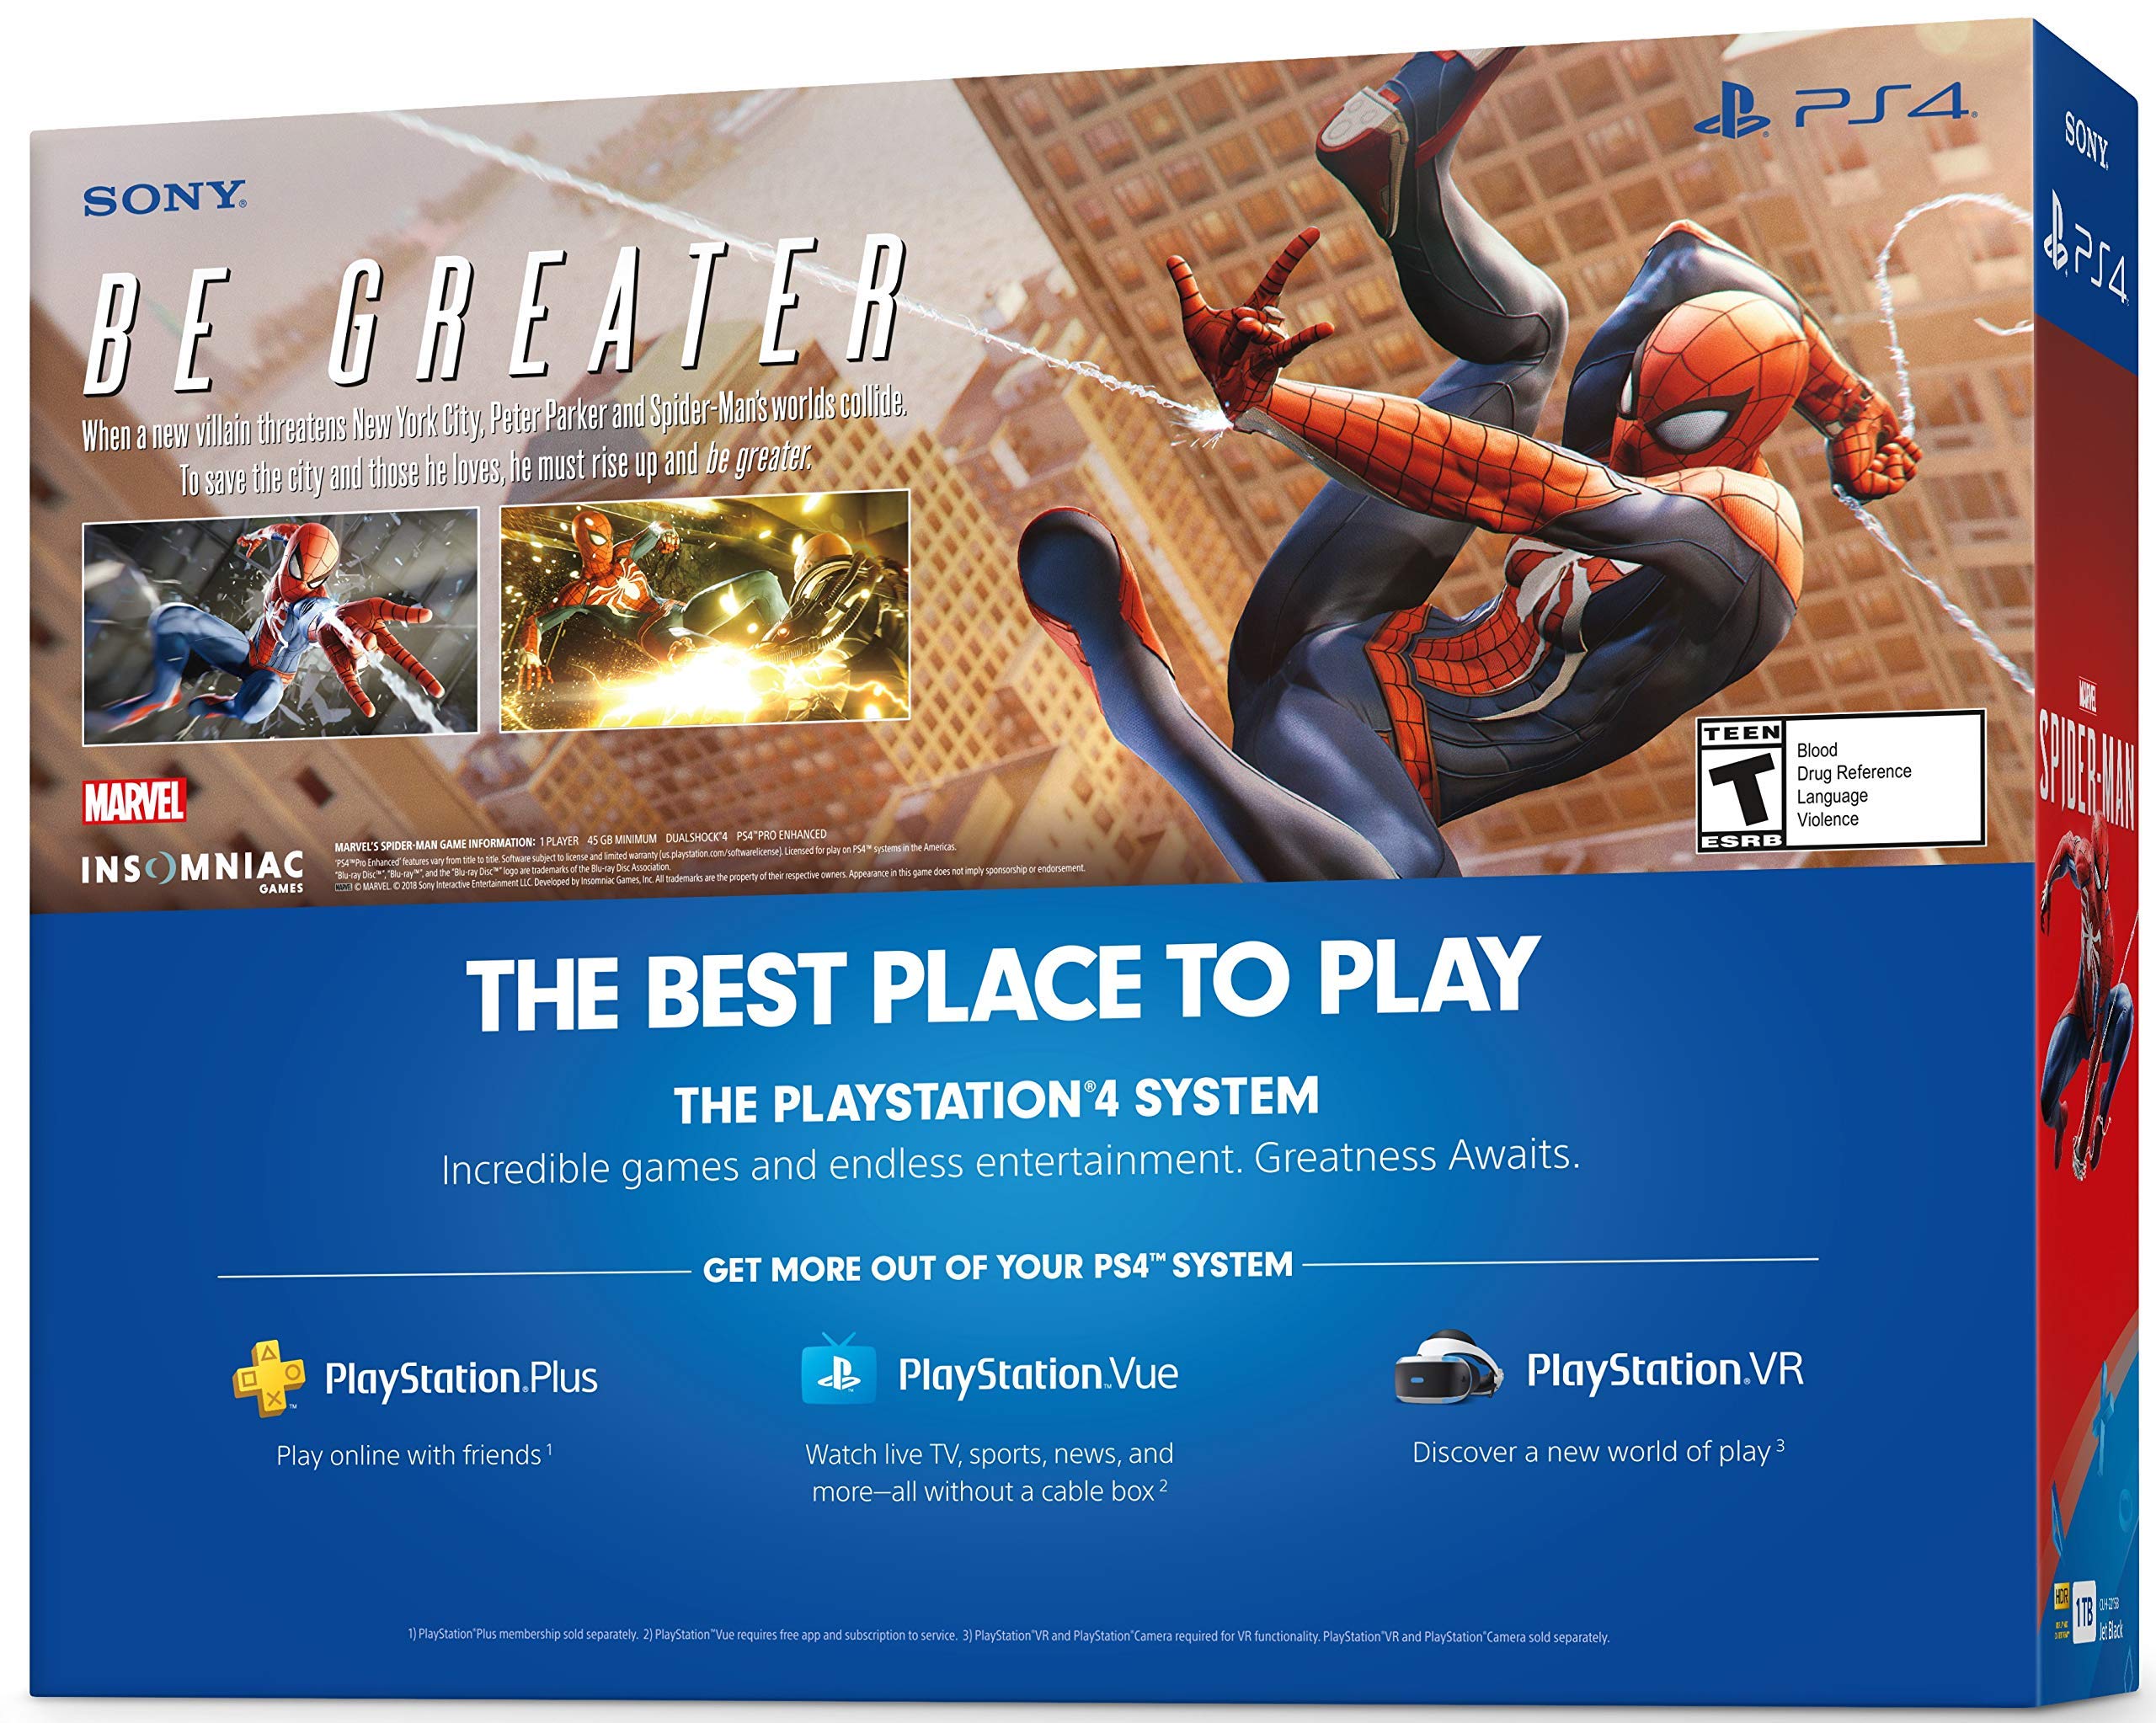 PlayStation 4 Slim 1TB Console - Marvels Spider-Man Bundle (Renewed)